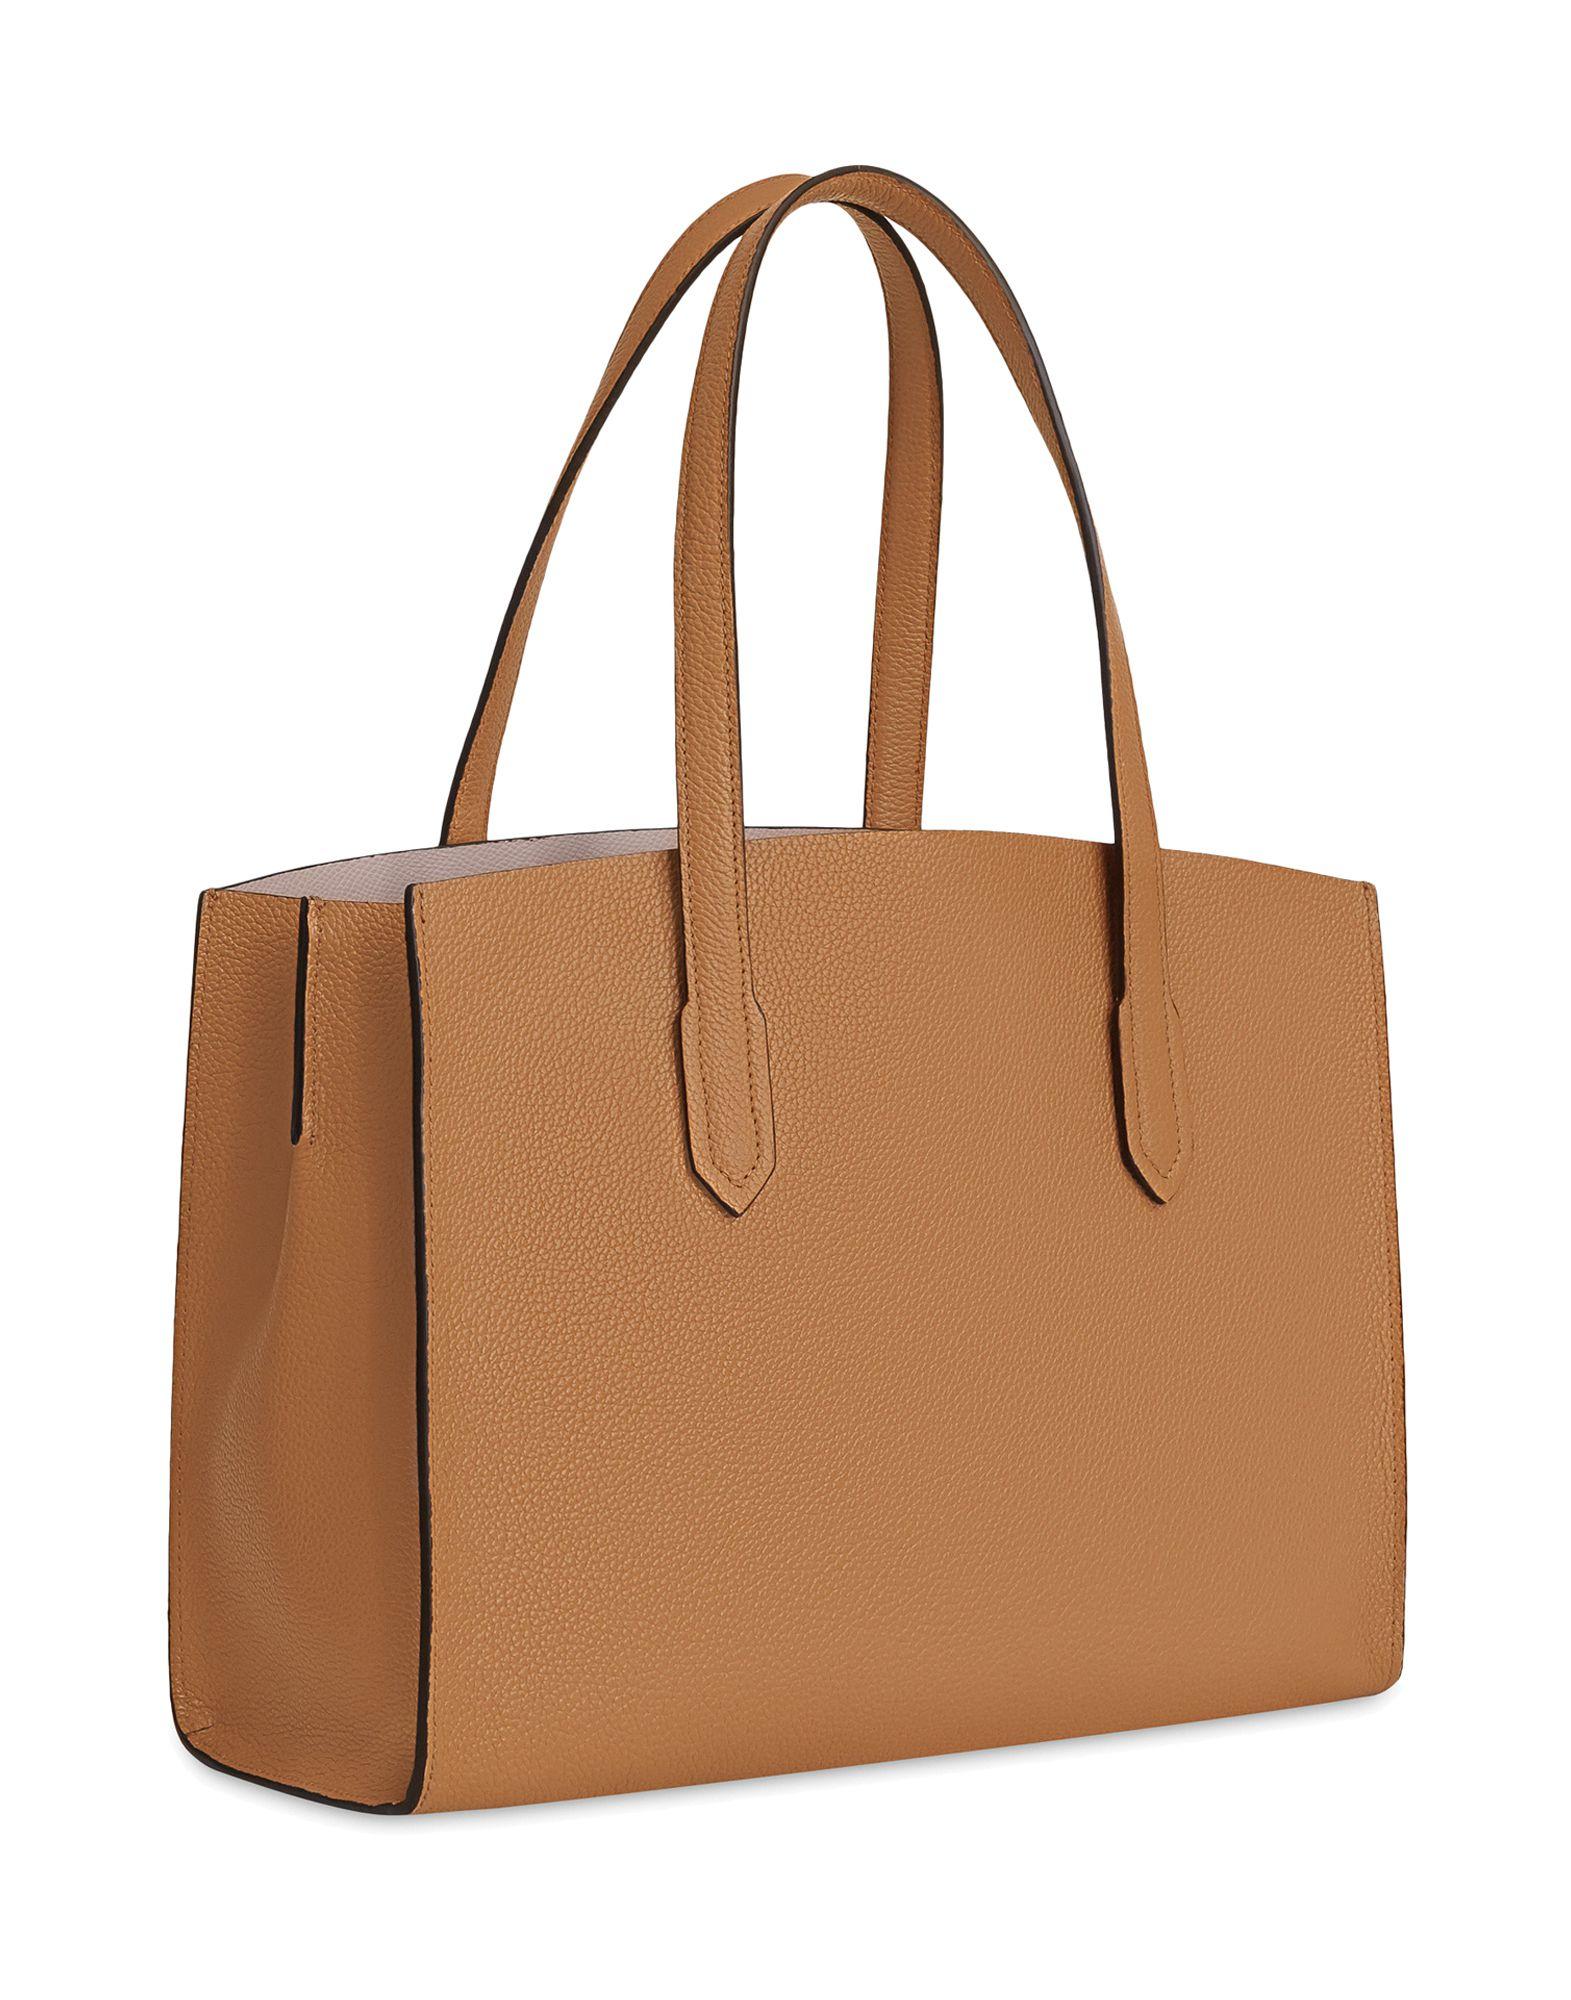 Furla Leather Handbag in Camel (Brown) - Lyst